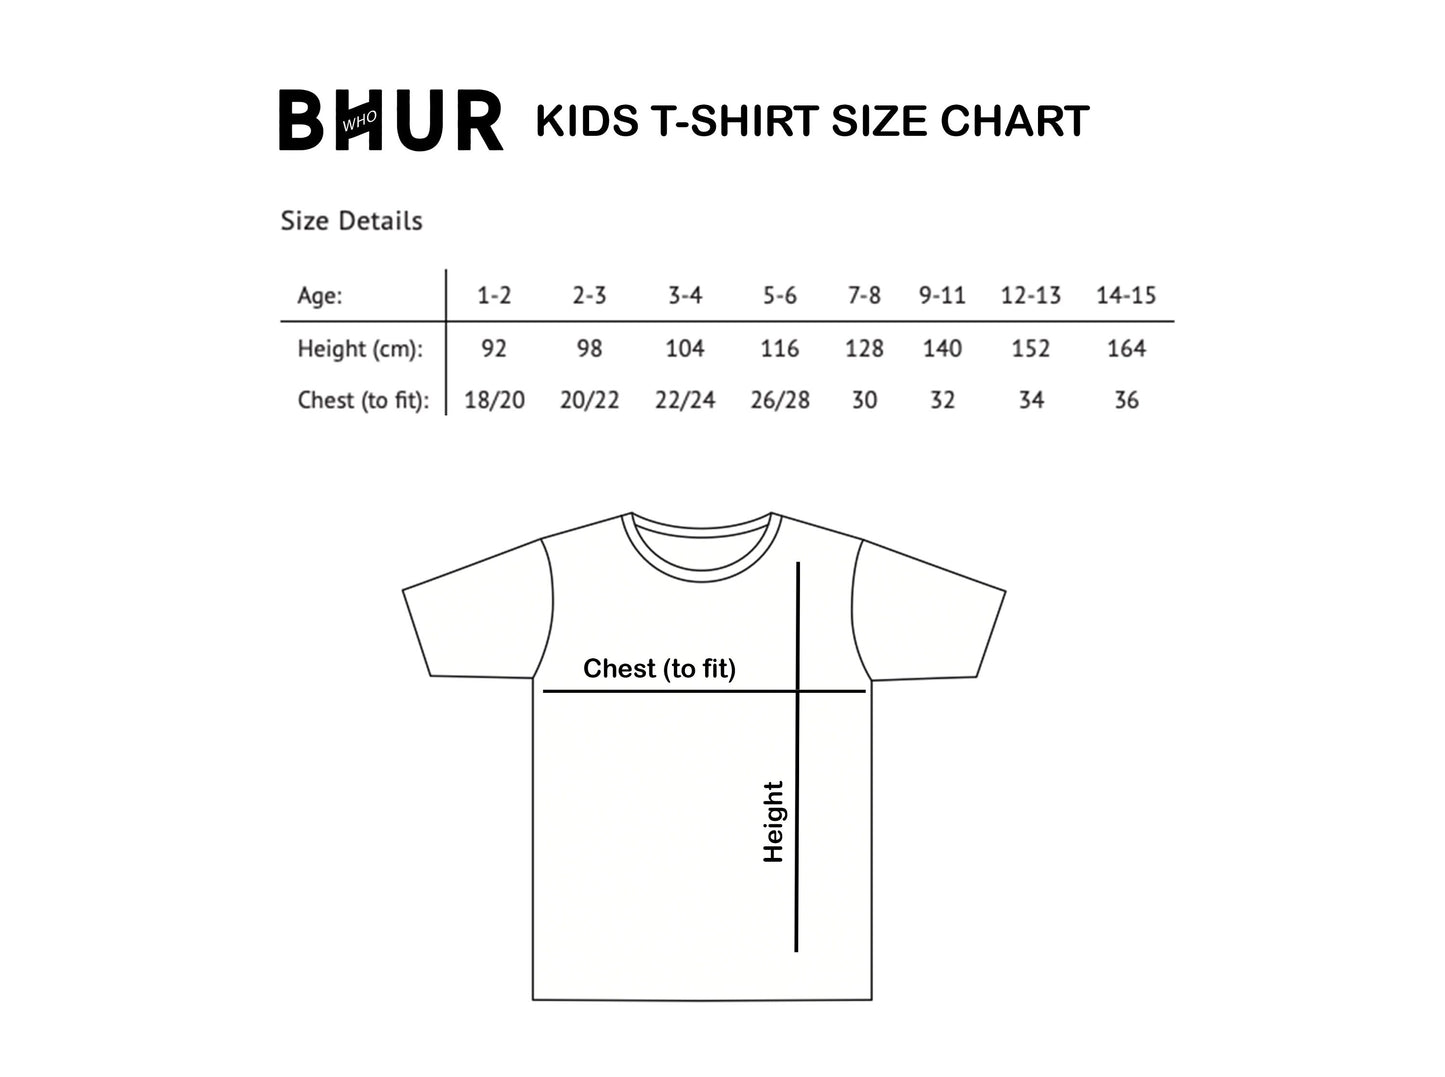 Cousin Crew t-shirt, Kids Cousin Crew Shirt